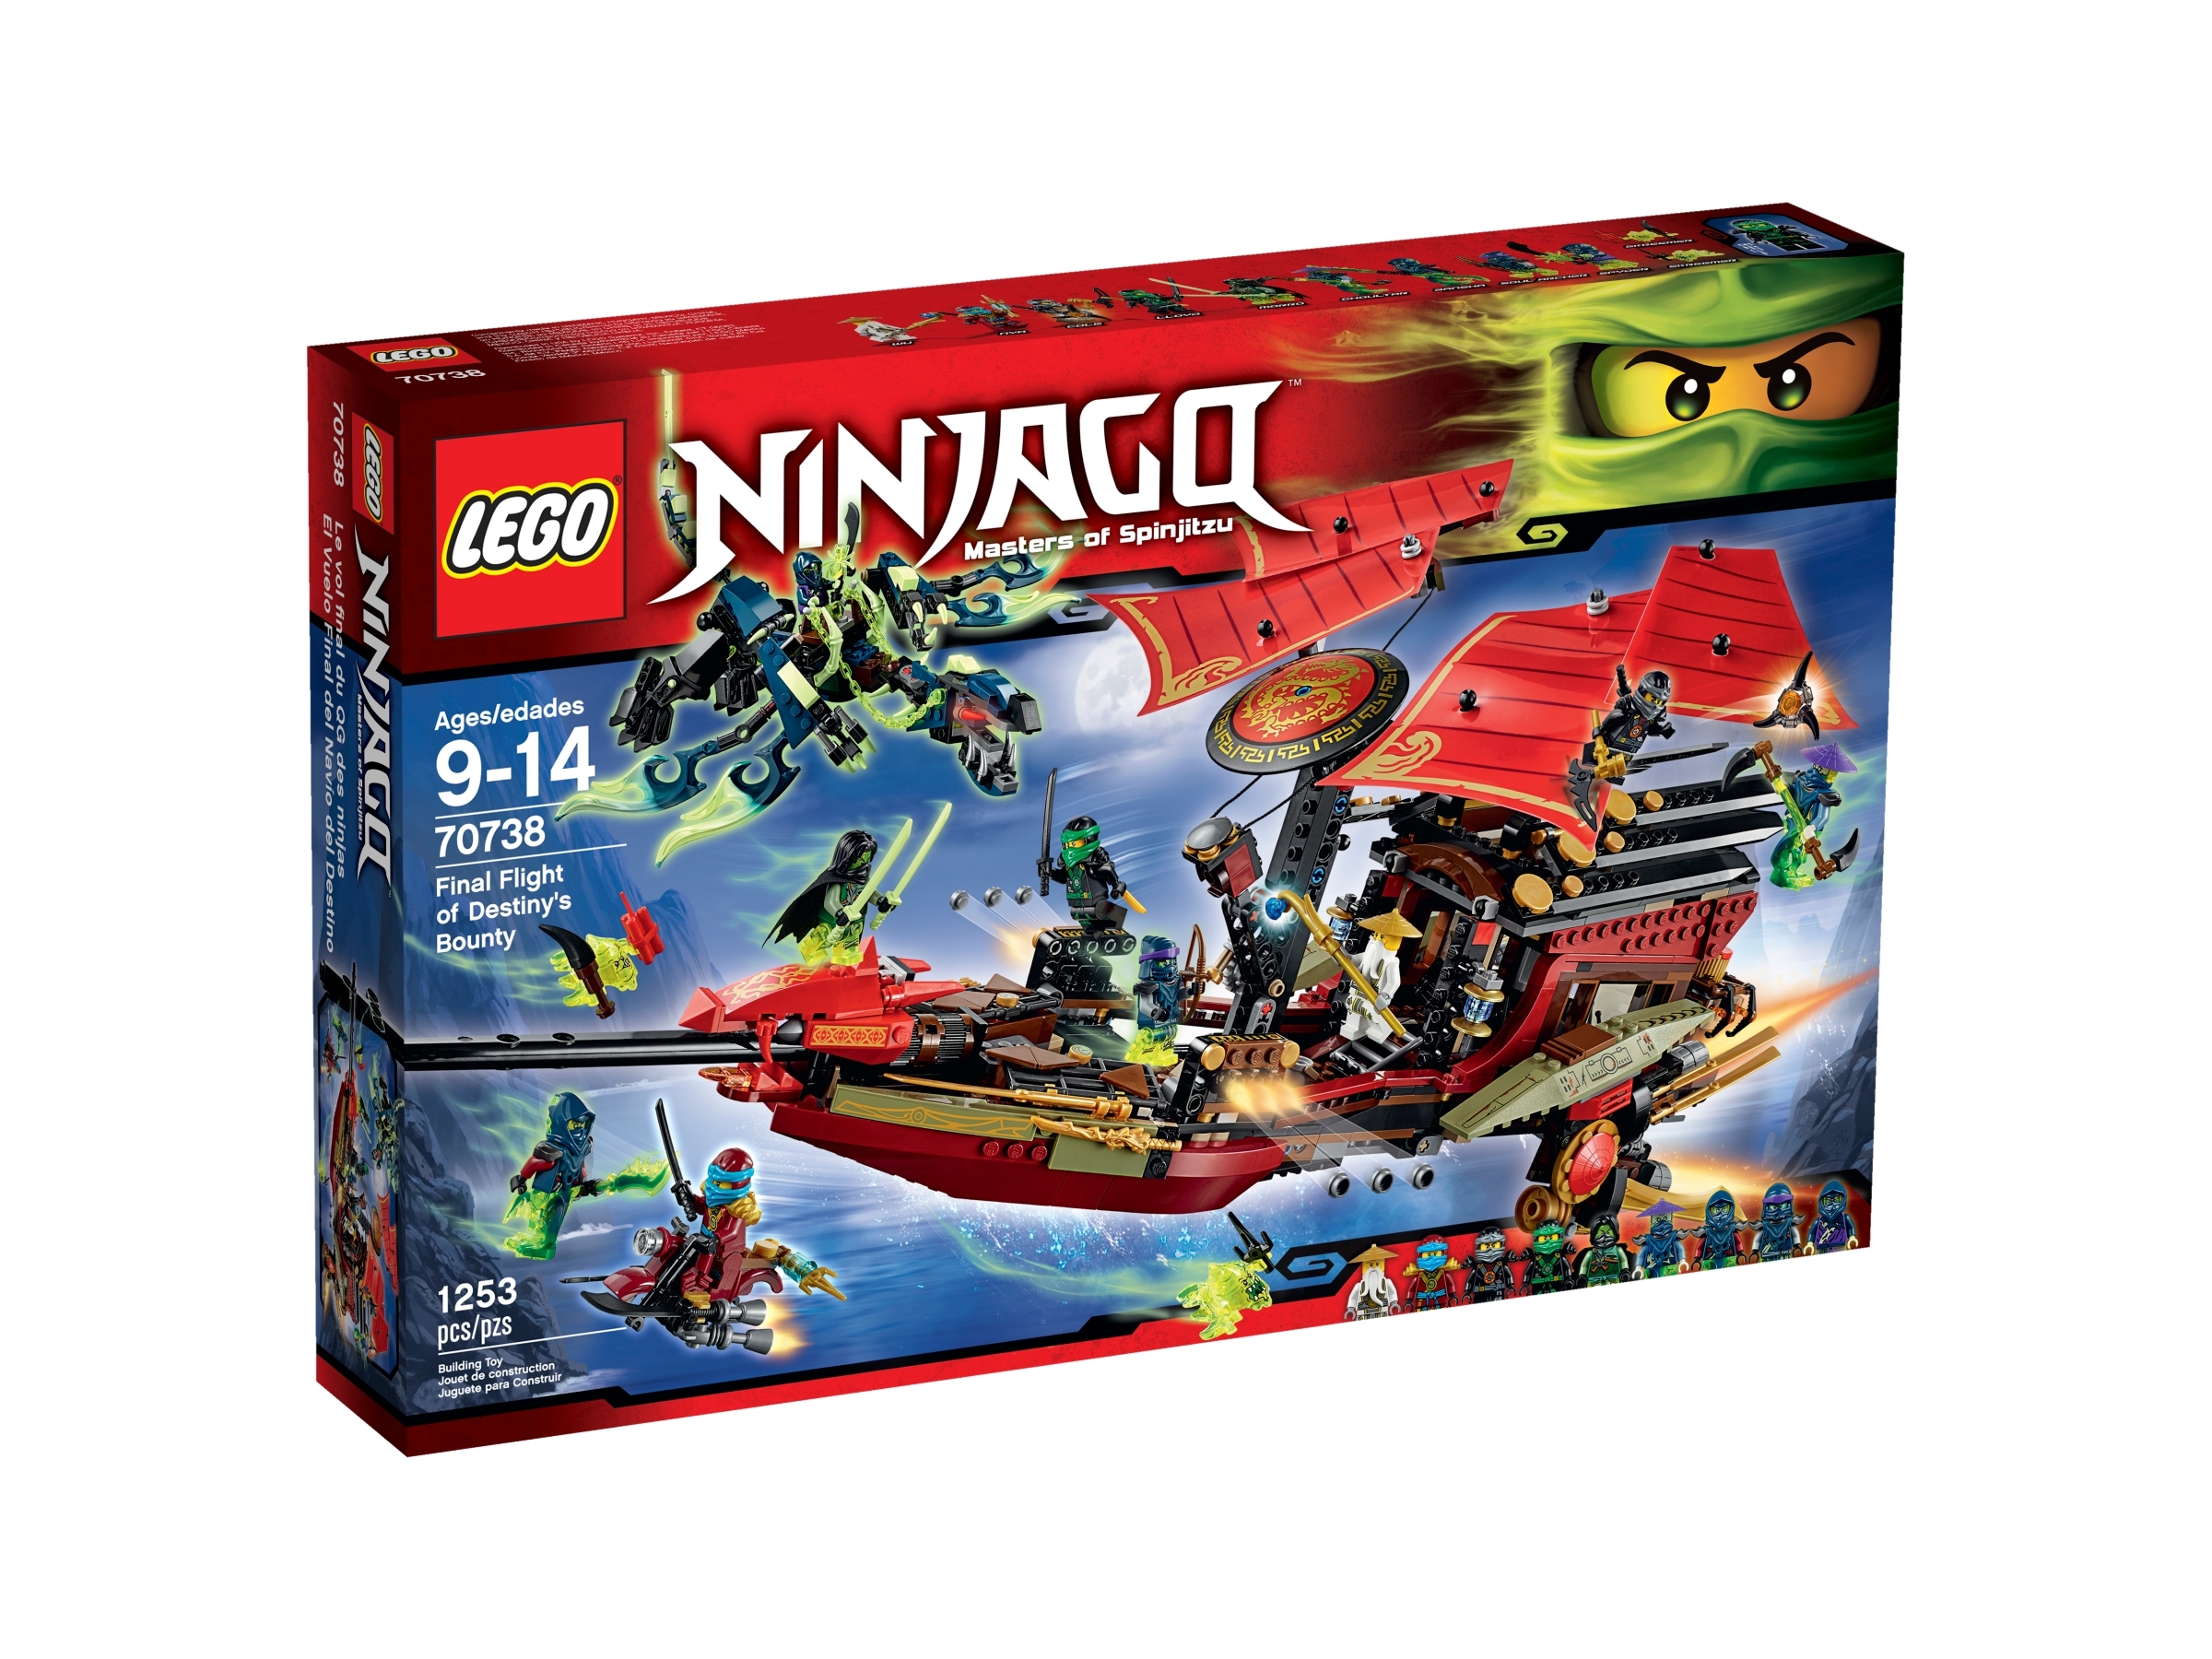 LEGO 2x Ninjago Skreemer Minifigure from set 70738 NEW!!!!! 